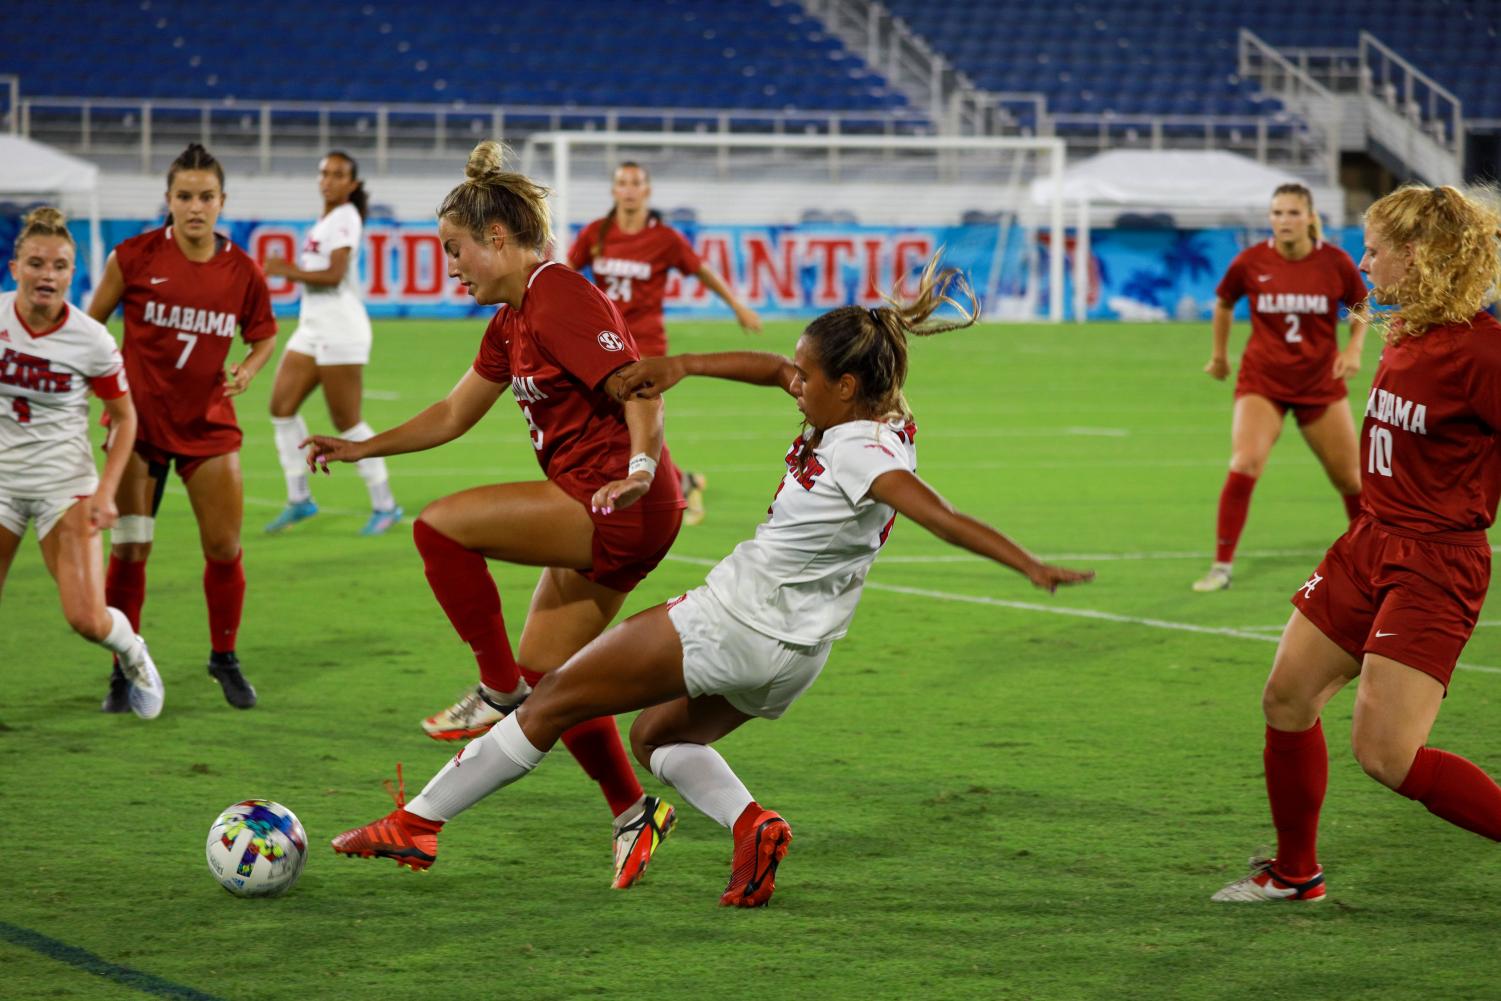 Gallery FAU Women’s Soccer kicks off against Alabama UNIVERSITY PRESS